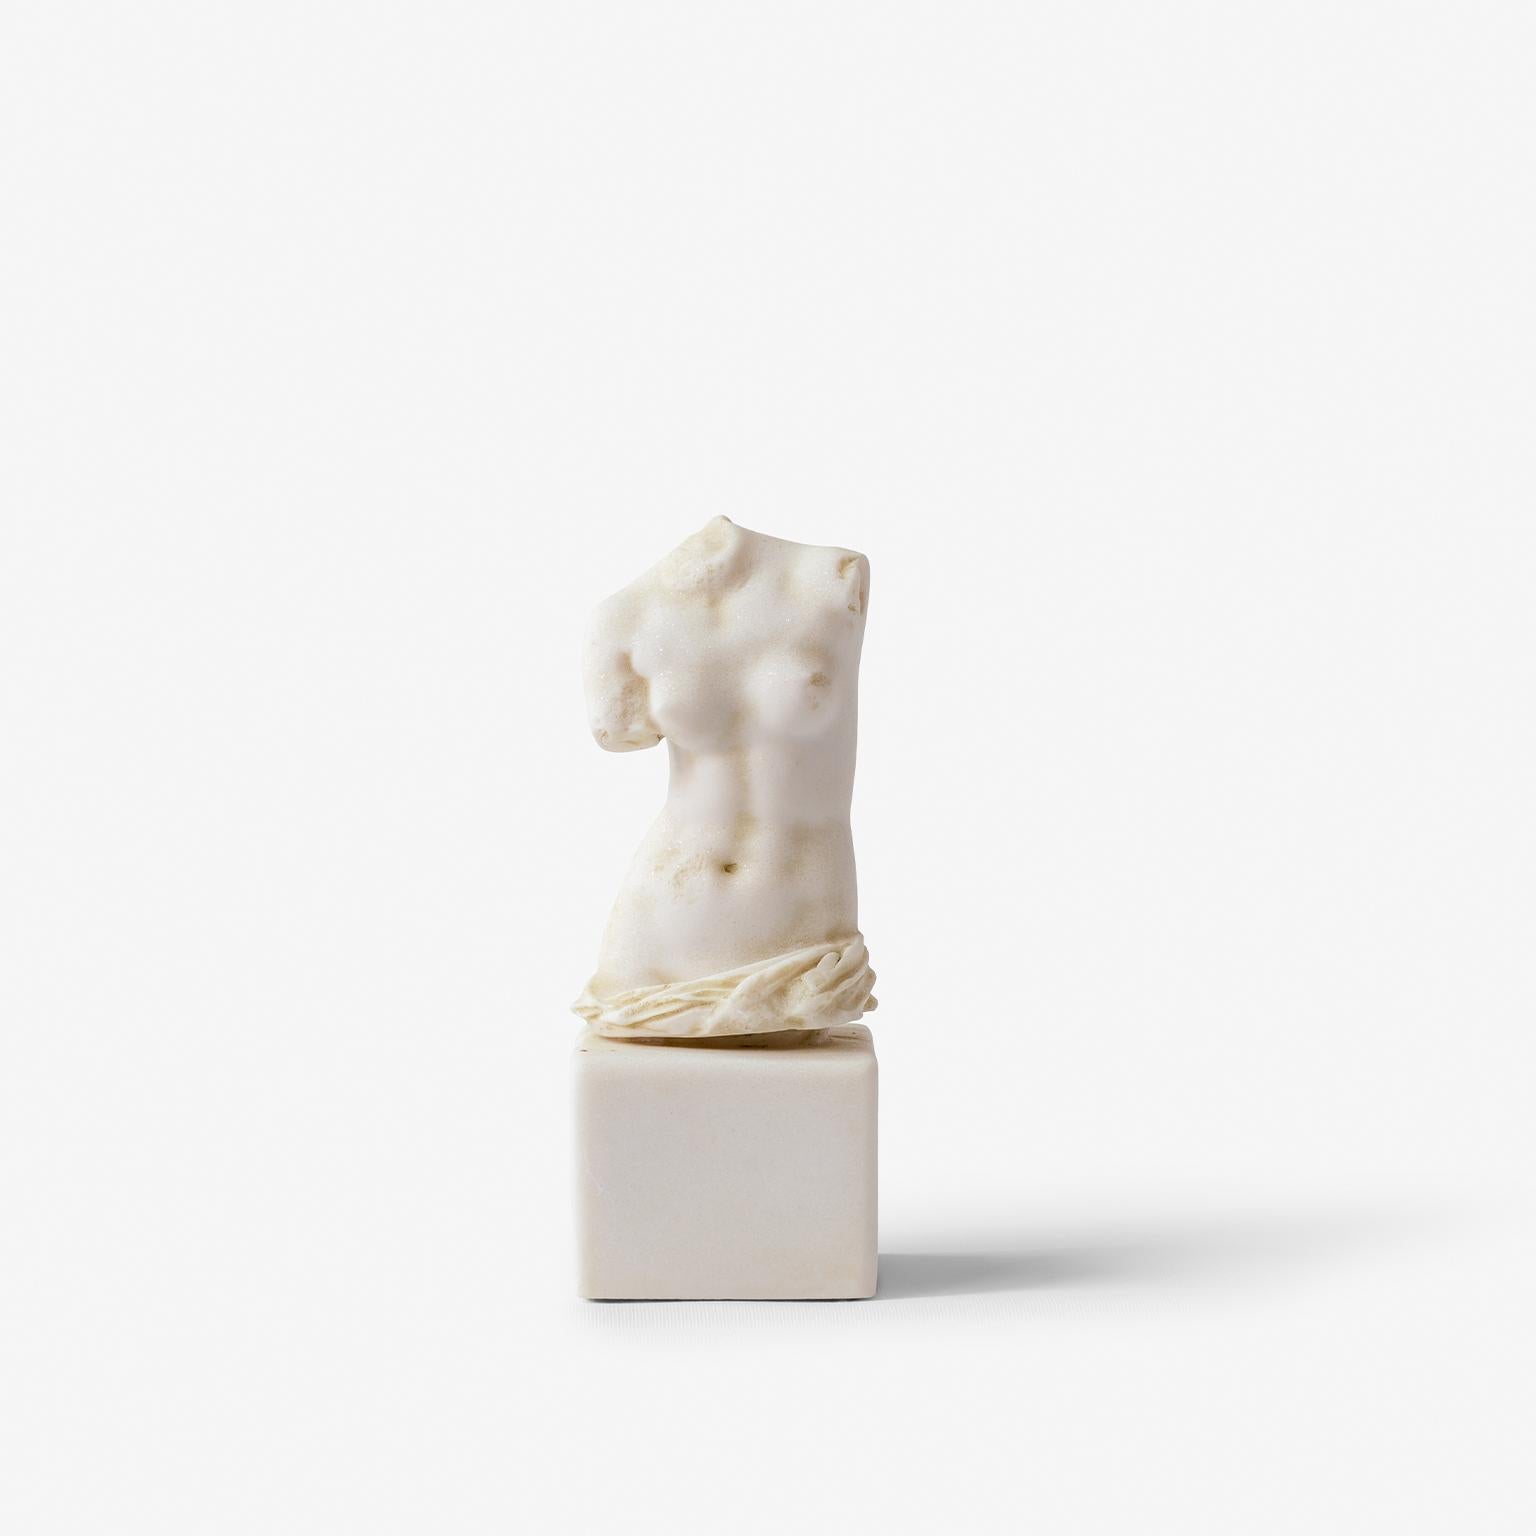 Contemporary Pinax Relief, Torso No:1, Torso No:2, Hermes Bust Medium, Corinthian Column For Sale